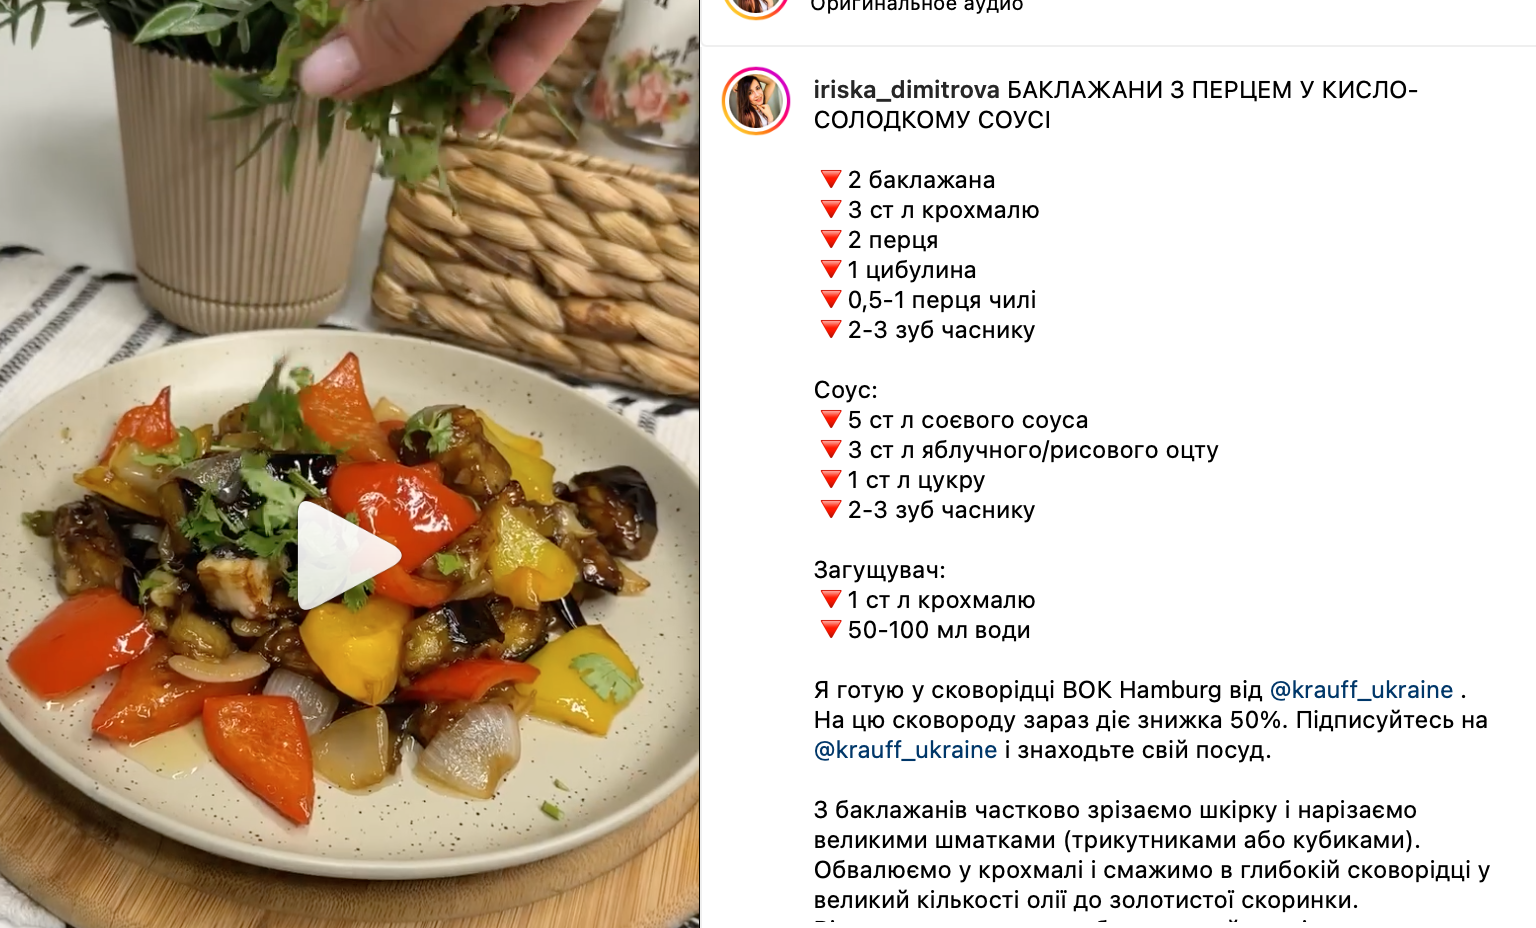 Recipe for an aubergine dish